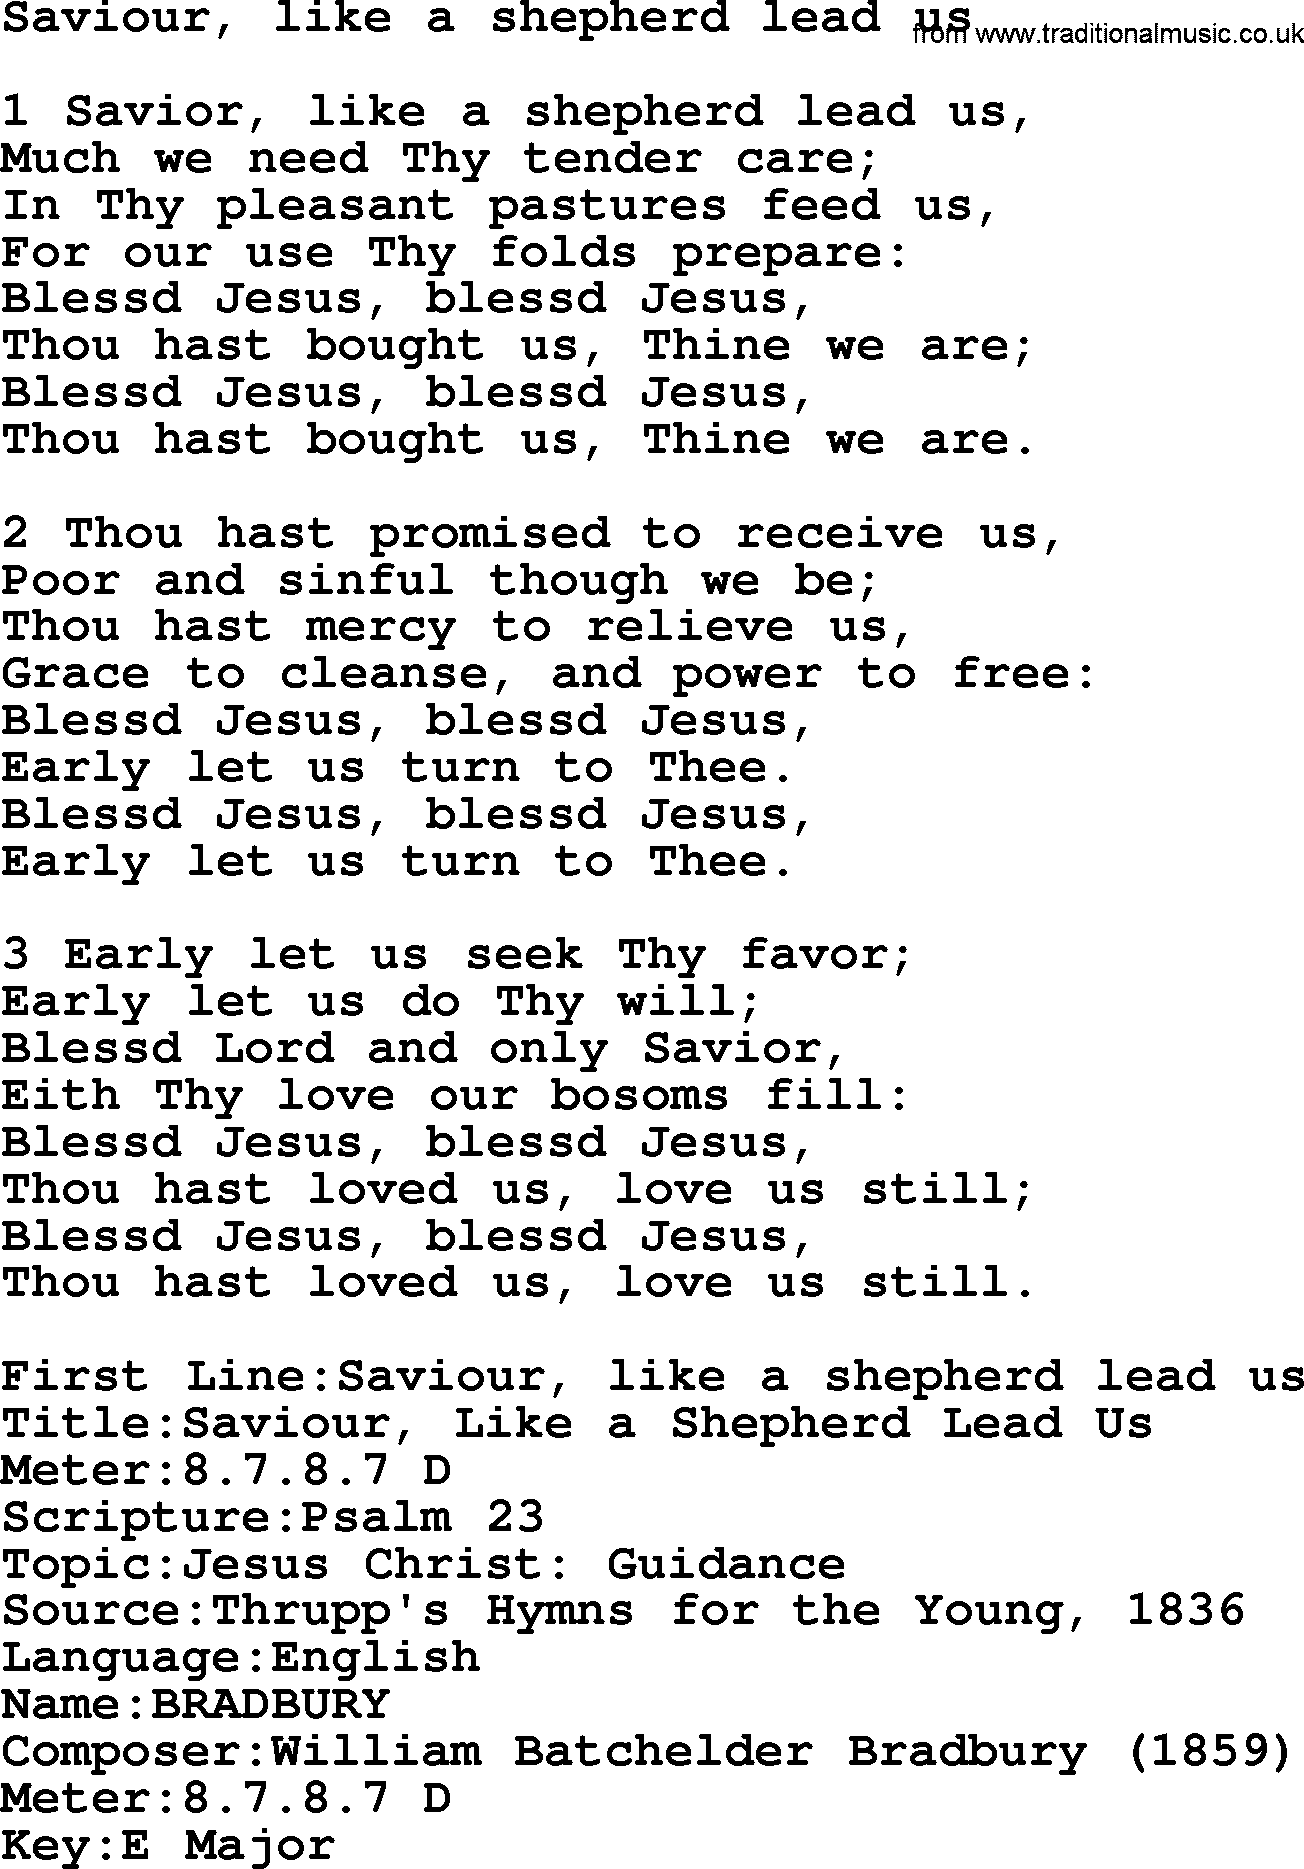 Presbyterian Hymns collection, Hymn: Saviour, Like A Shepherd Lead Us, lyrics and PDF